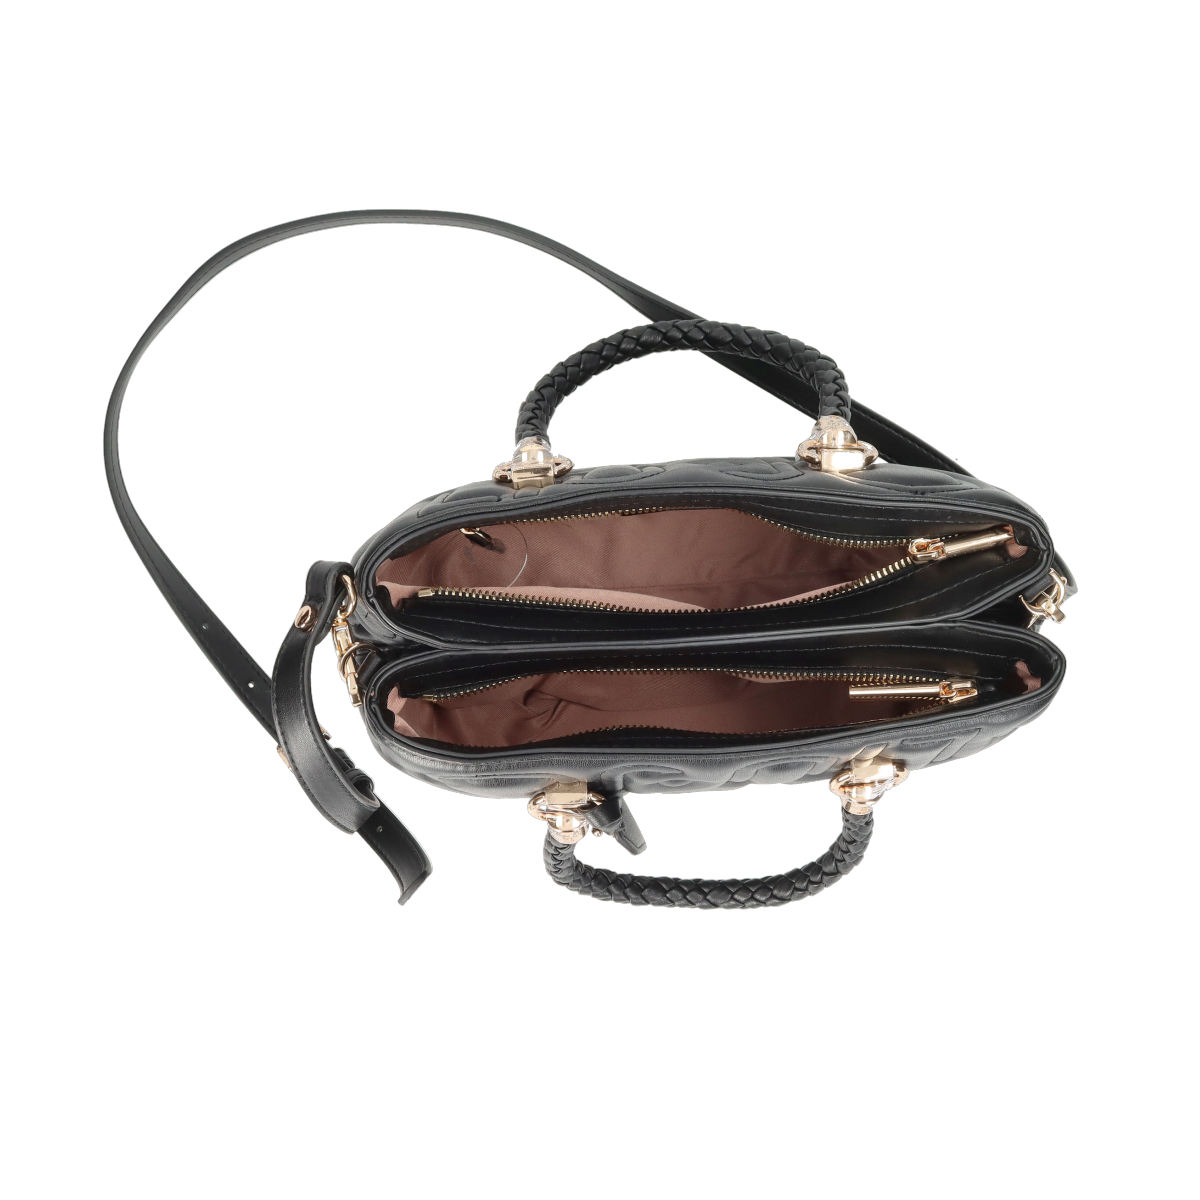 Liu Jo women's elegant bag - black | Robel.shoes